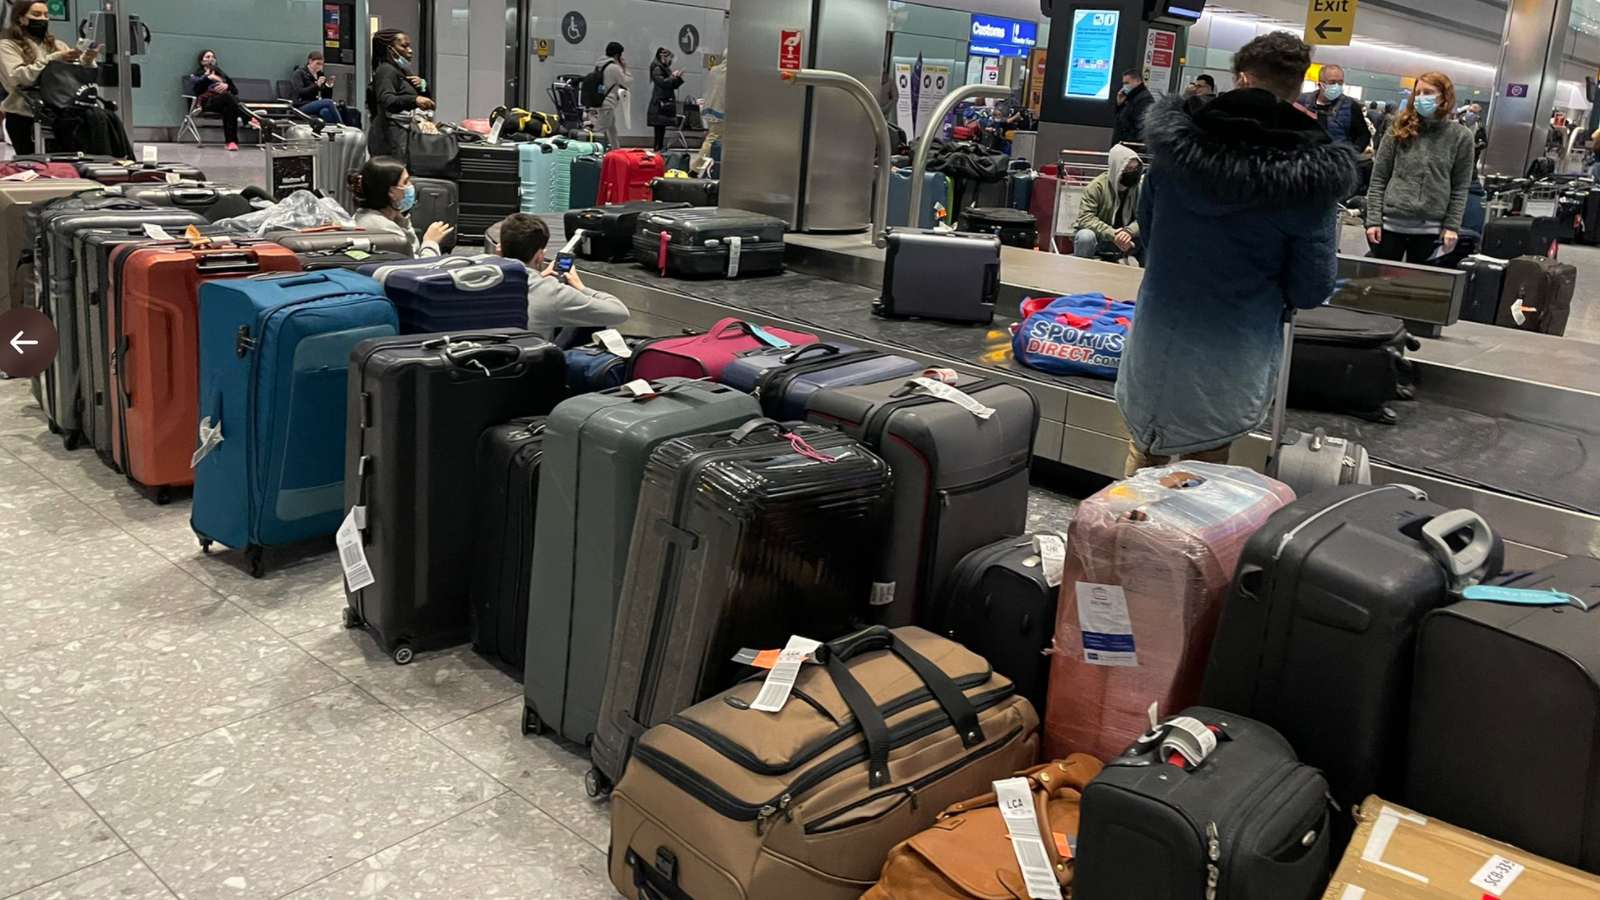 Luggage at Heathrow airport UK